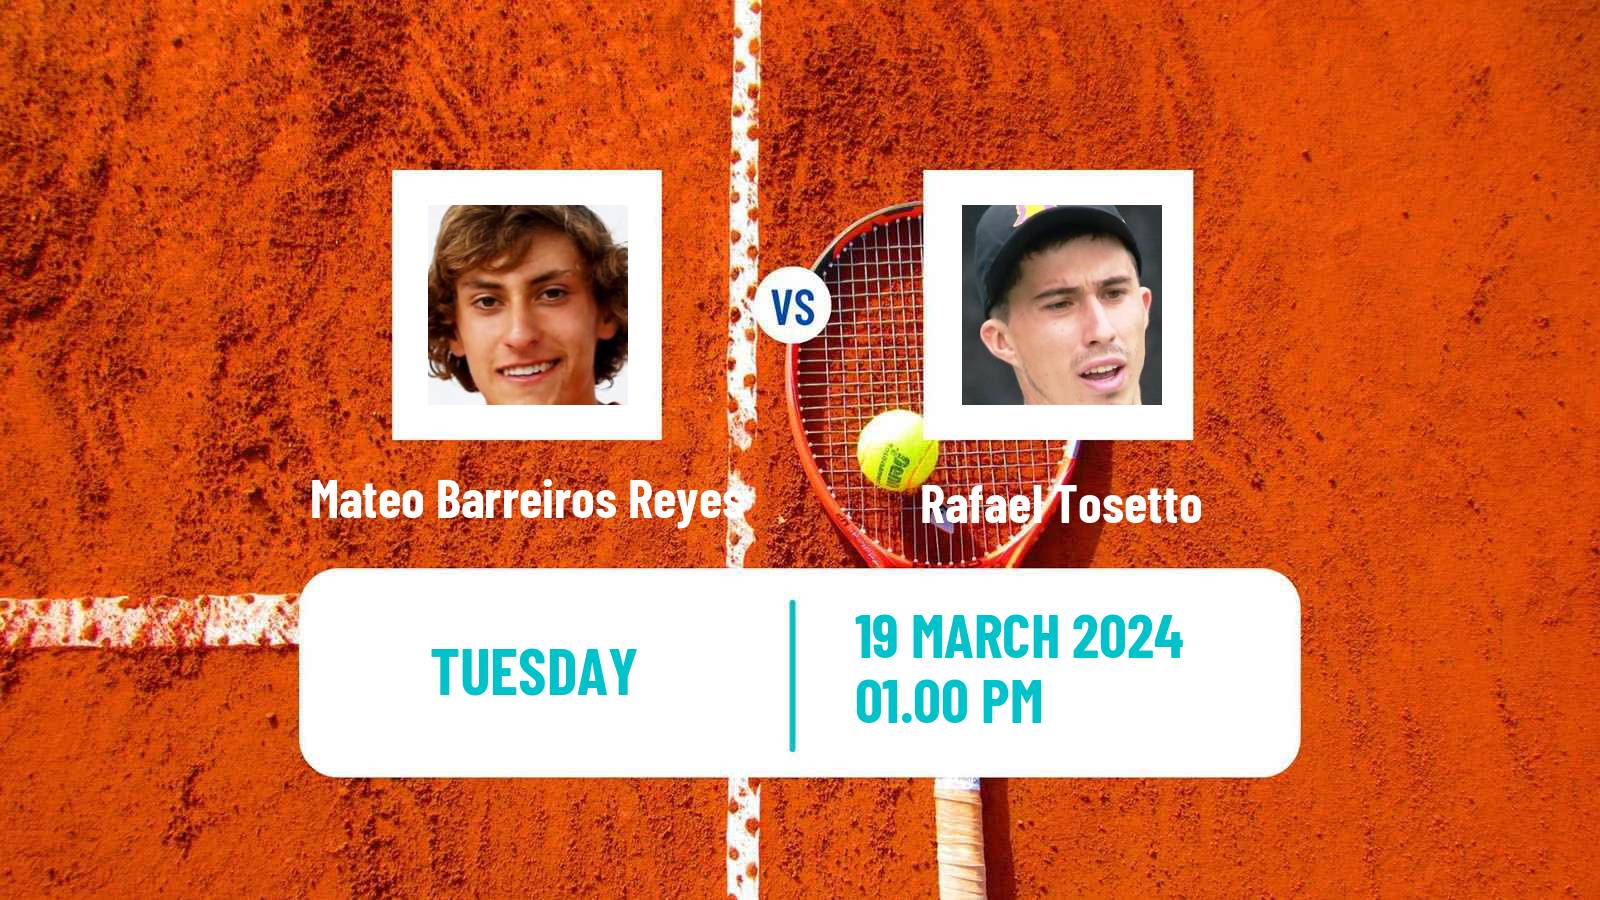 Tennis ITF M25 Maceio Men Mateo Barreiros Reyes - Rafael Tosetto